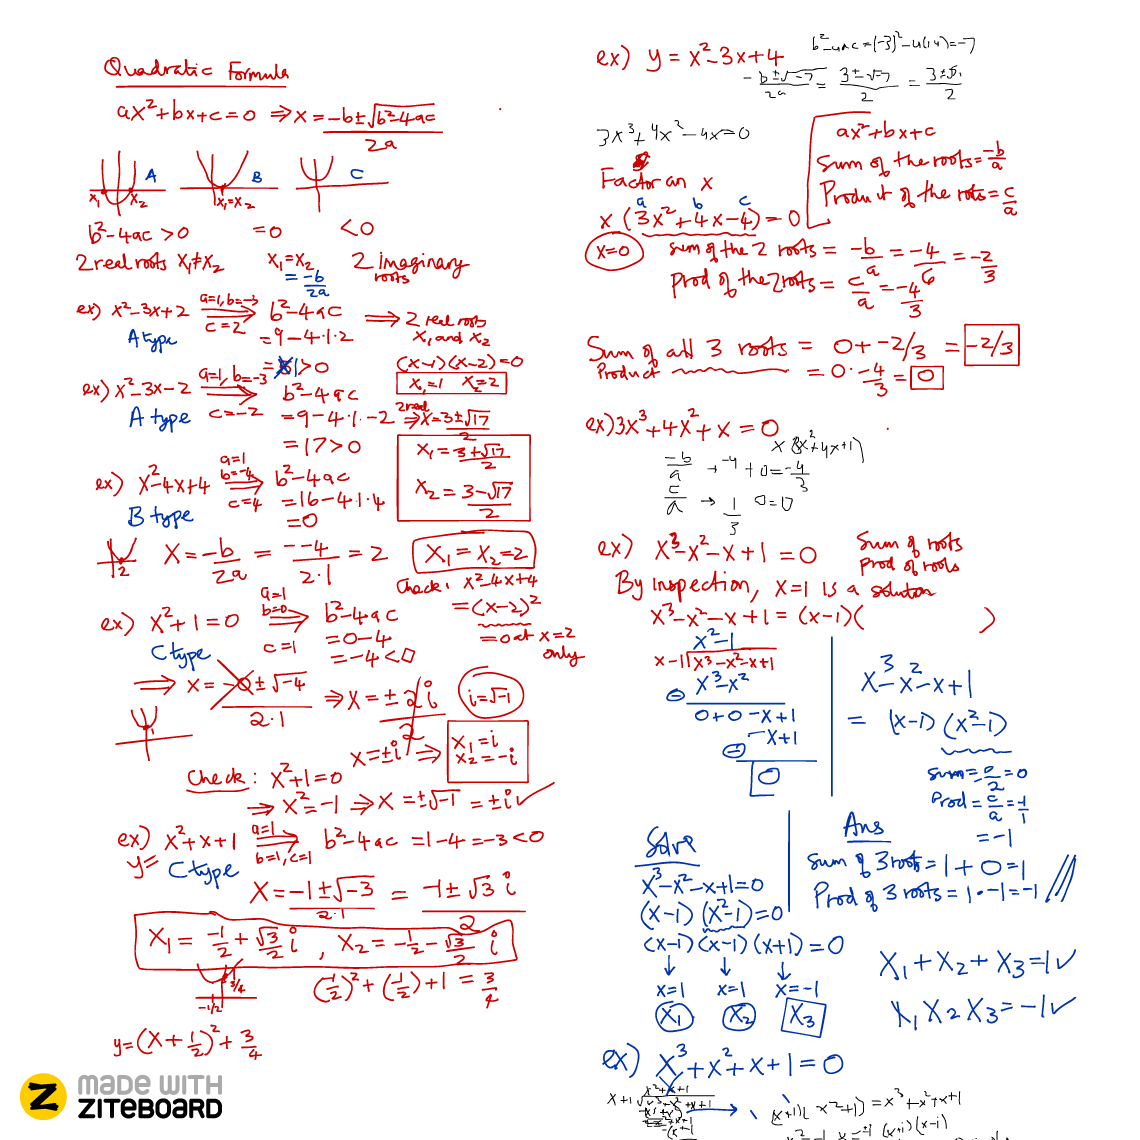 ziteboard-math-lesson.png